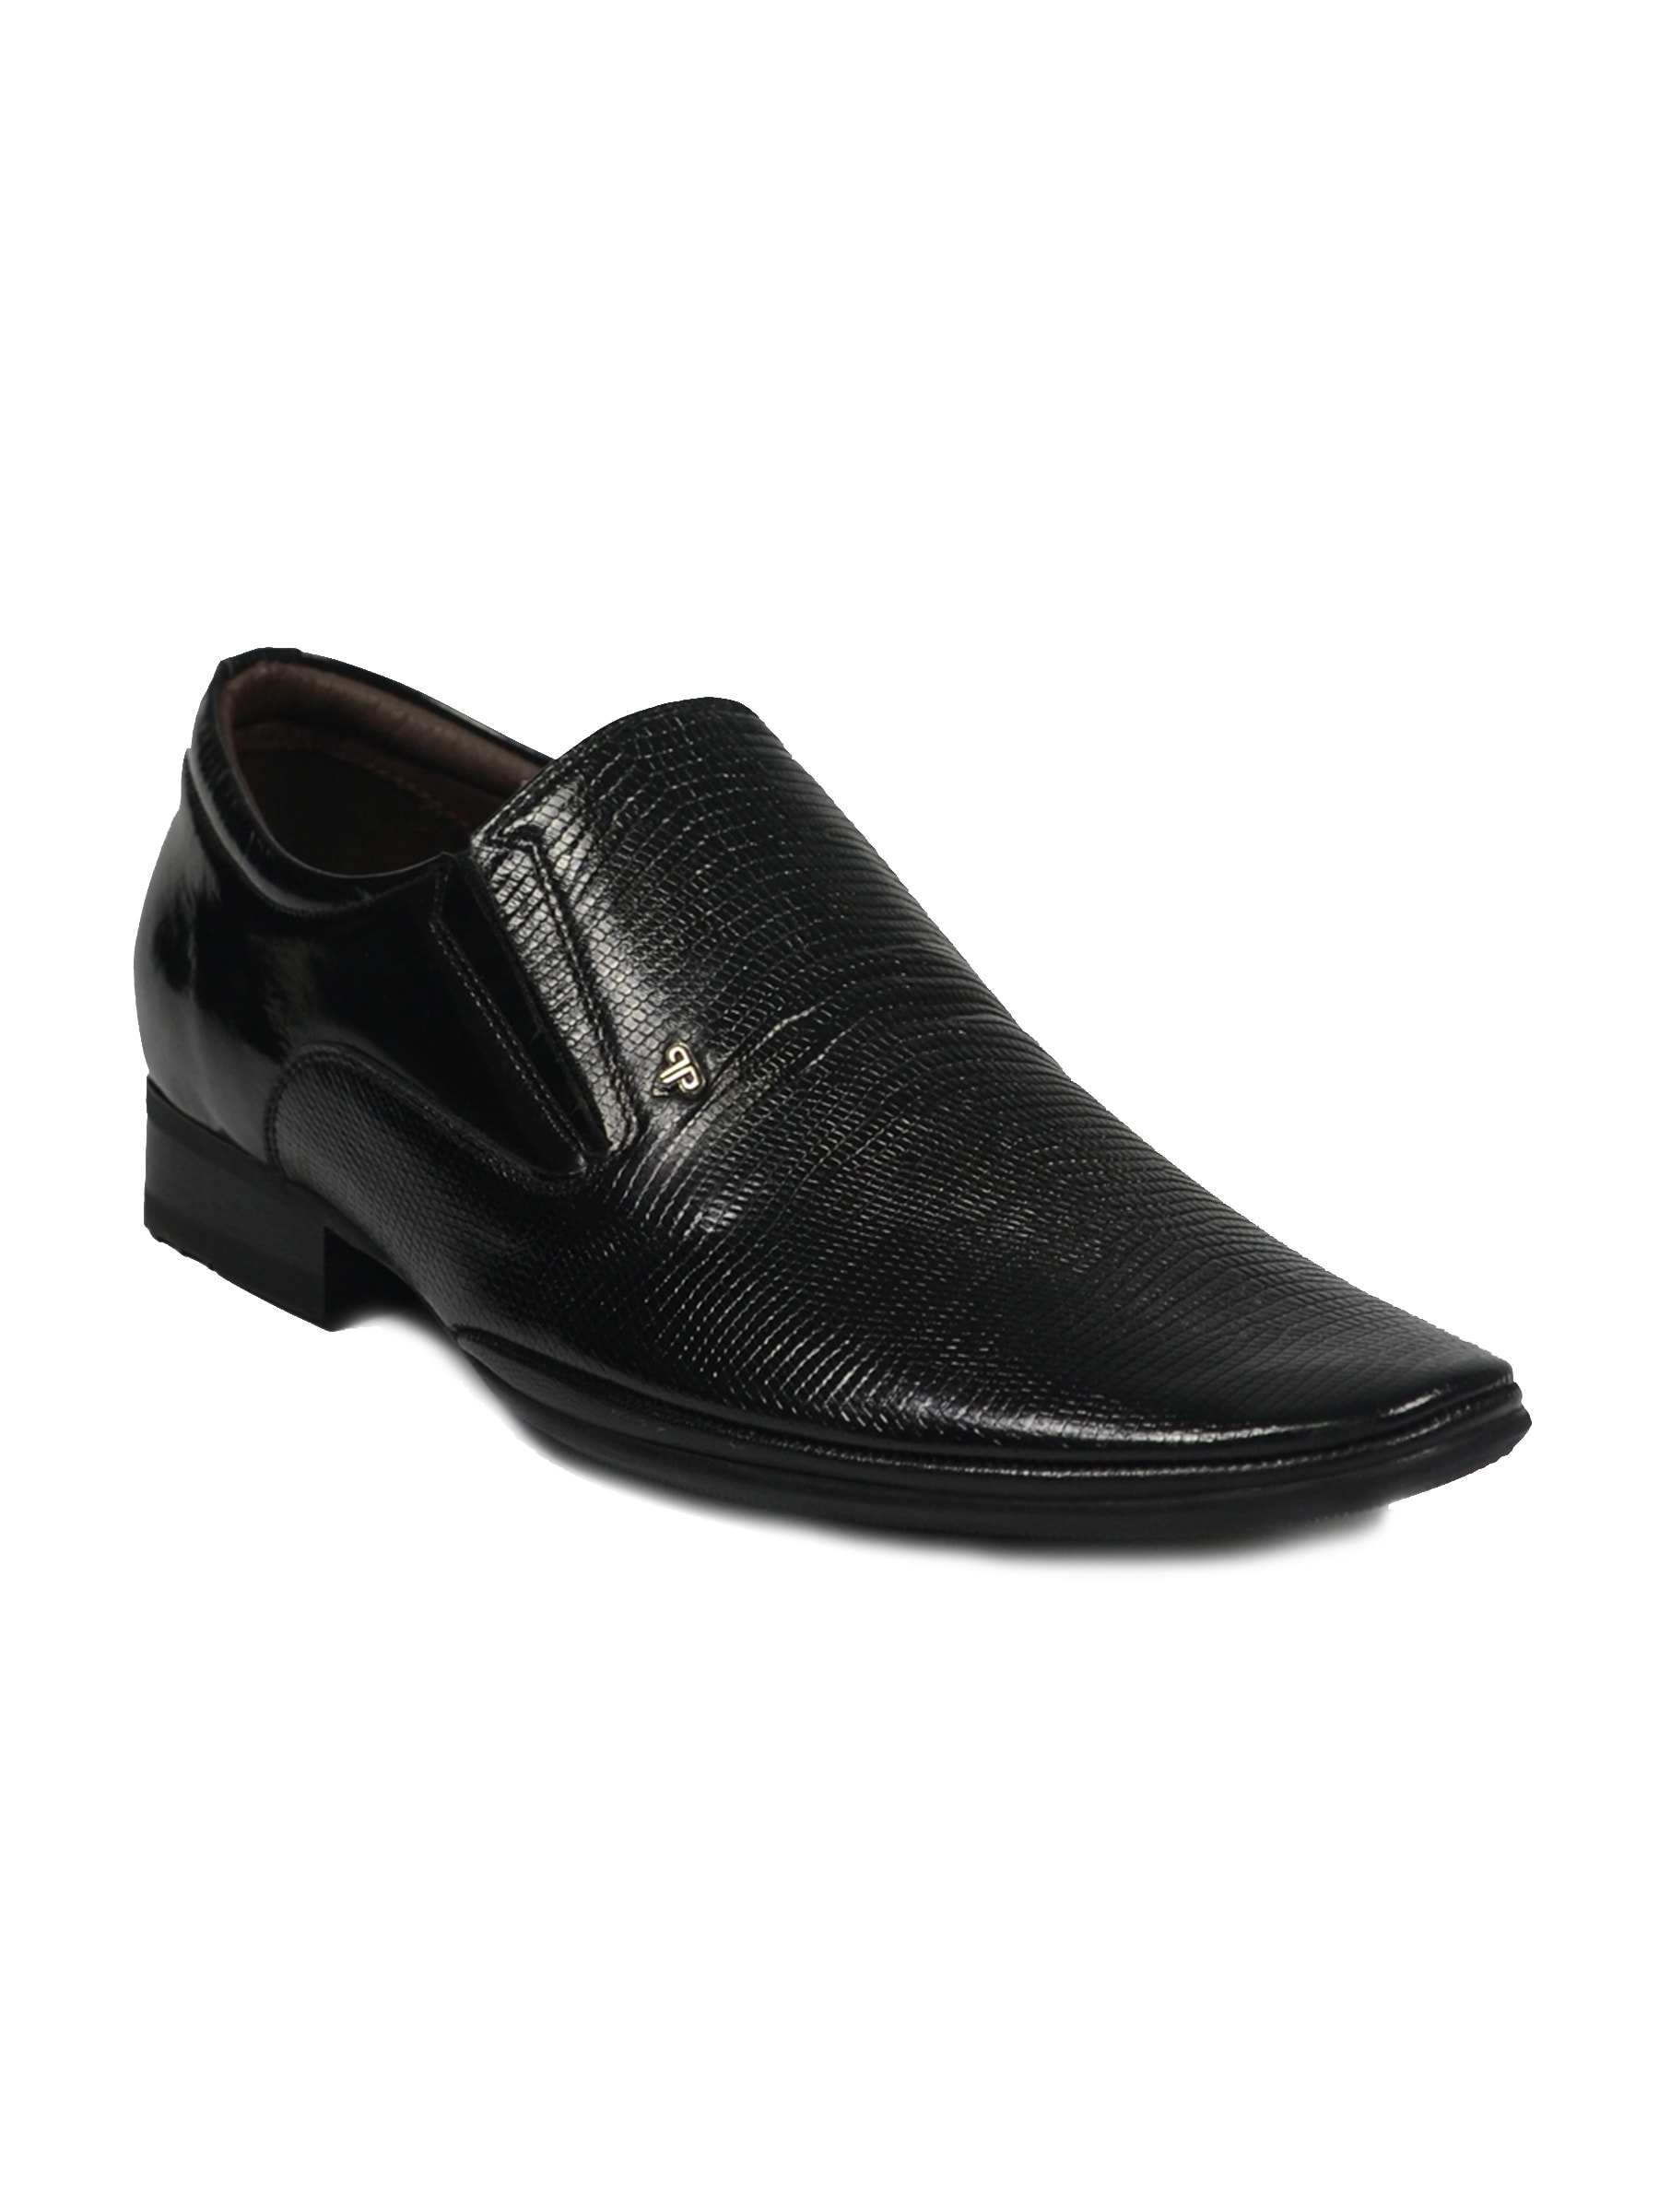 Provogue Men's Formal Black Shoe